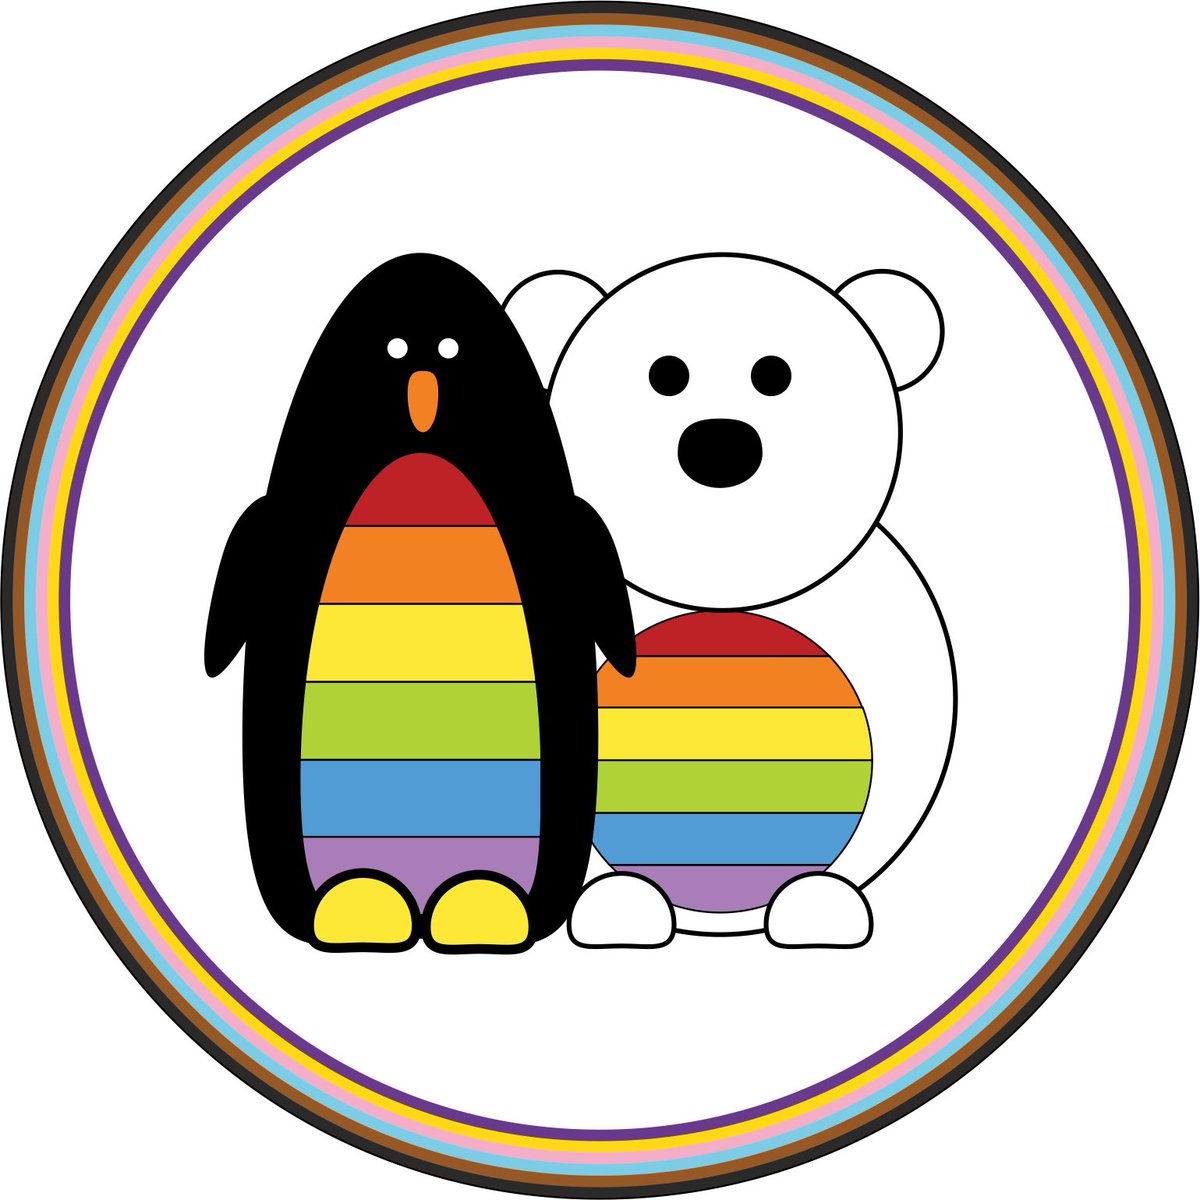 Here, help yourselves to these #PolarPride logos (designed by @Antonarctica) to decorate your profiles, desktops, banners, cakes, etc! Tomorrow is #PolarPrideDay!!